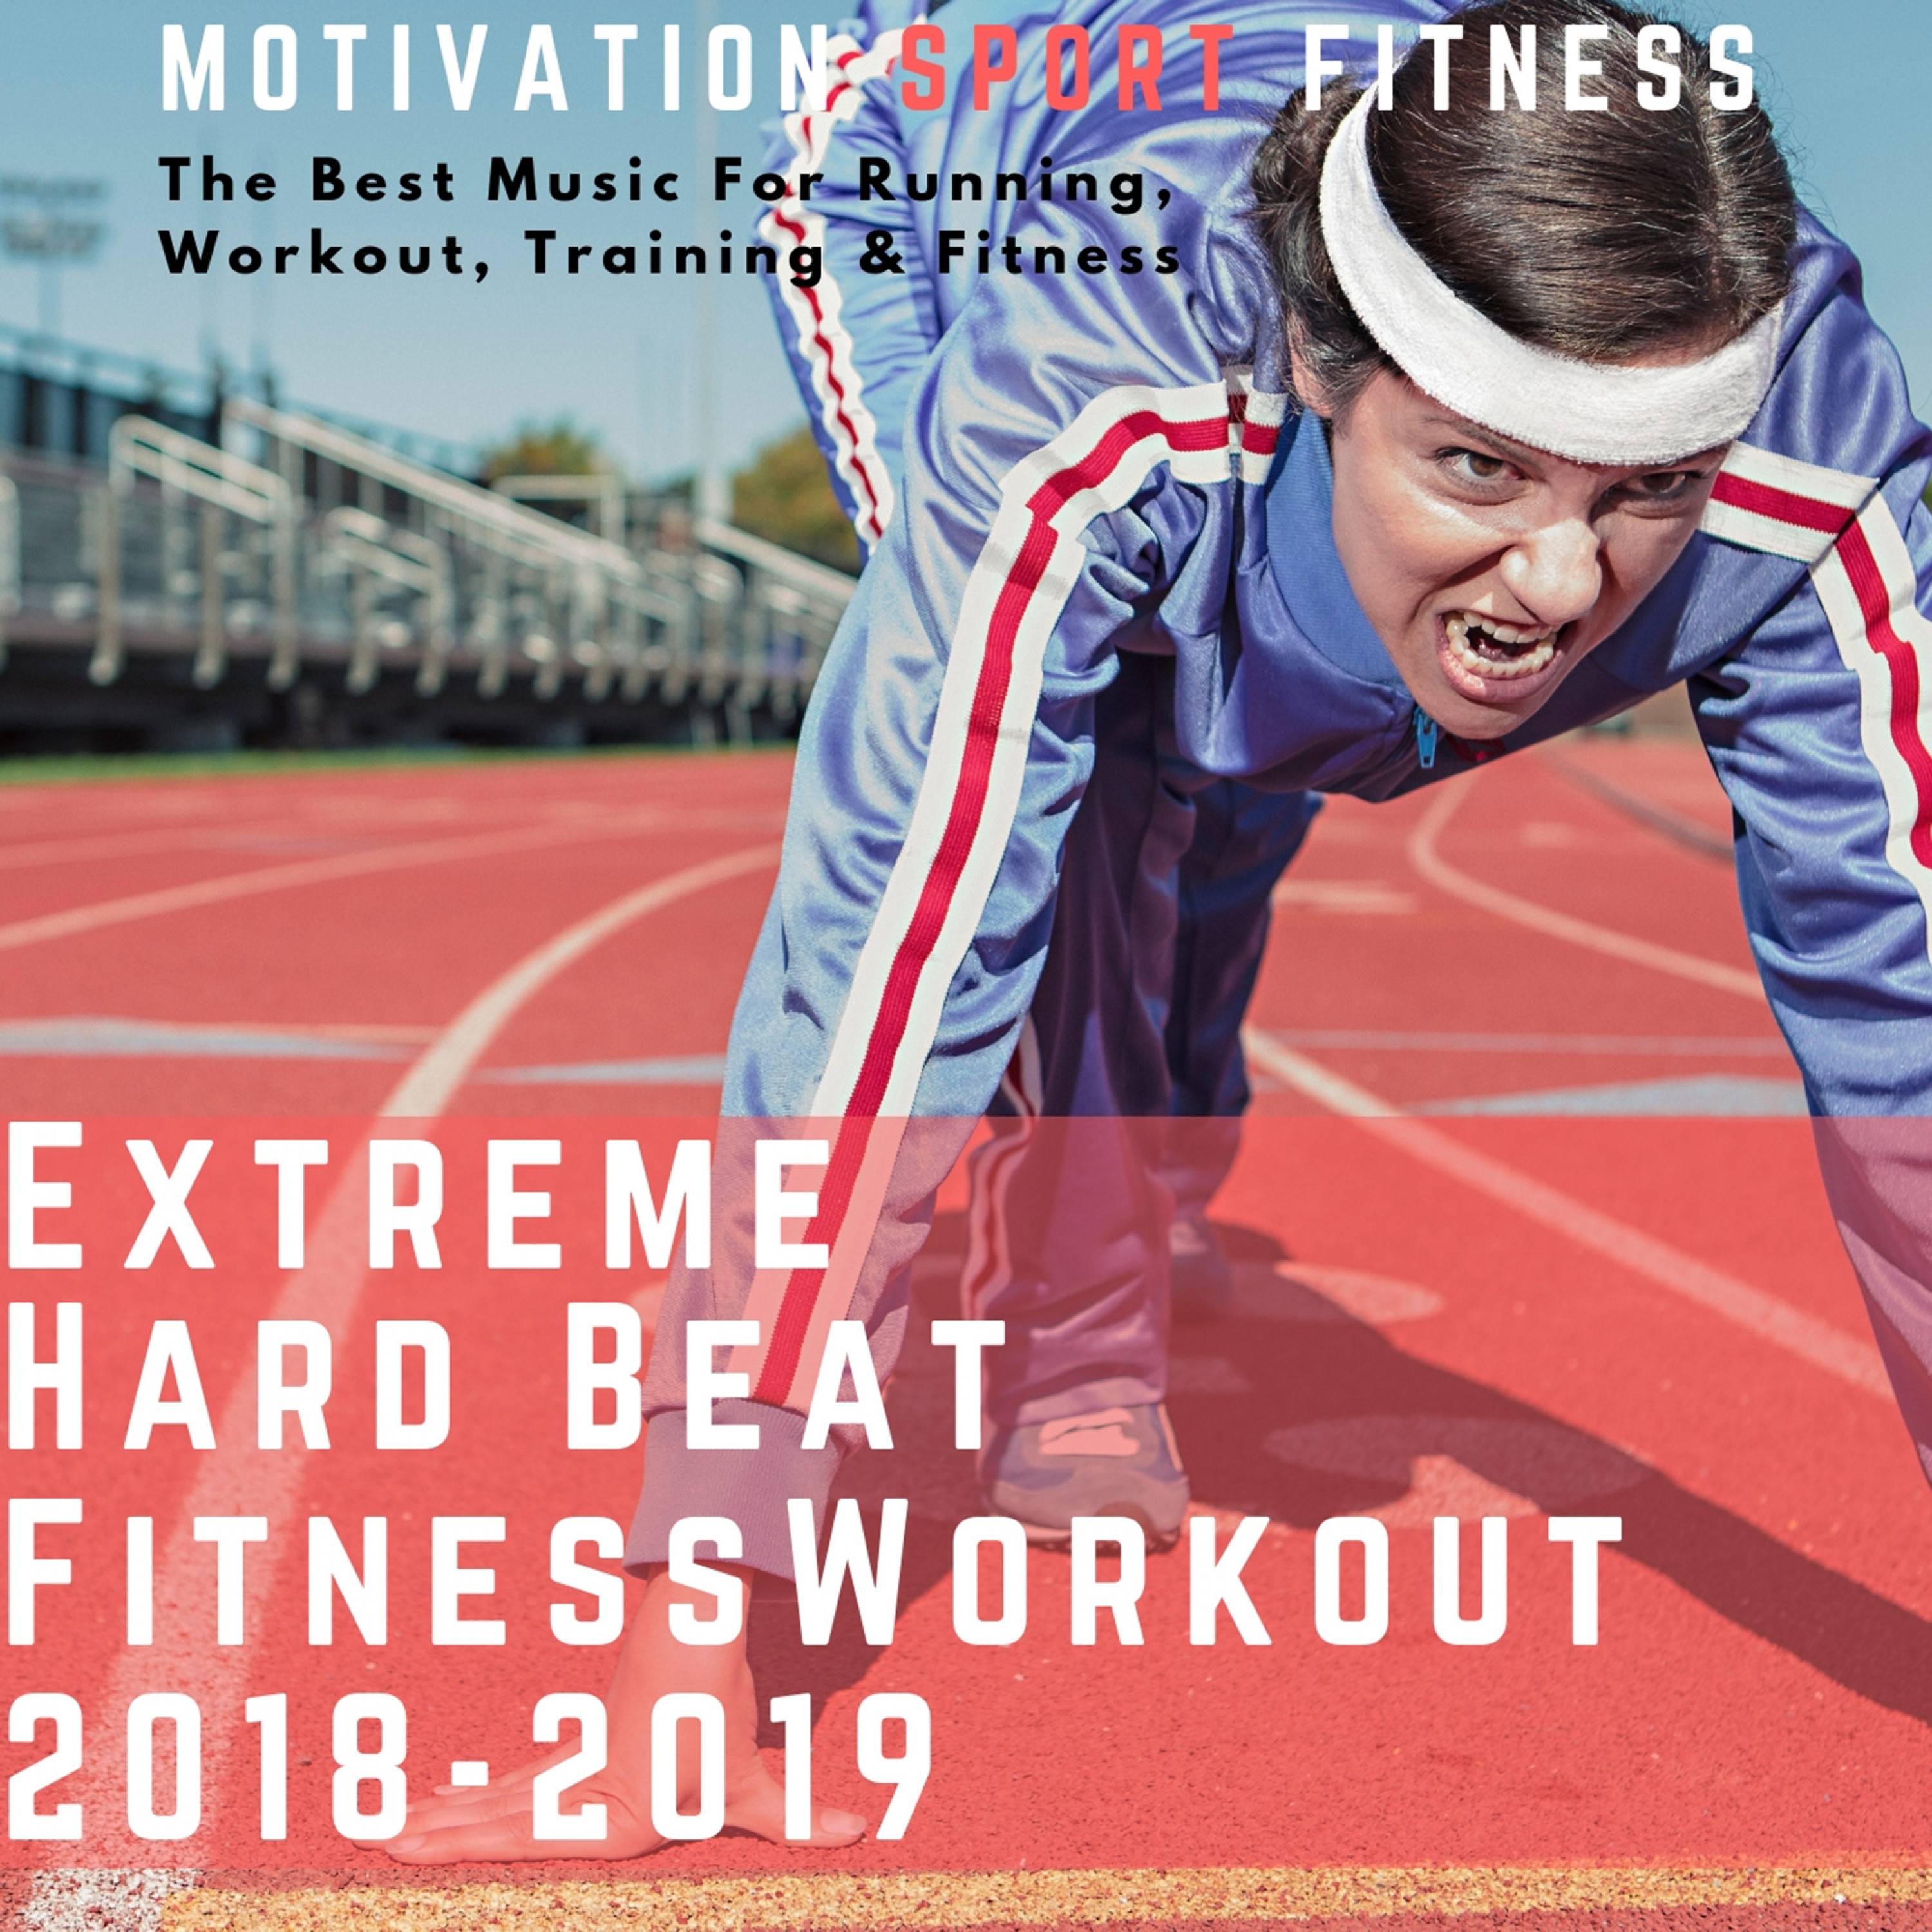 Extreme Beat Hard Fitness Workout 2018 - 2019